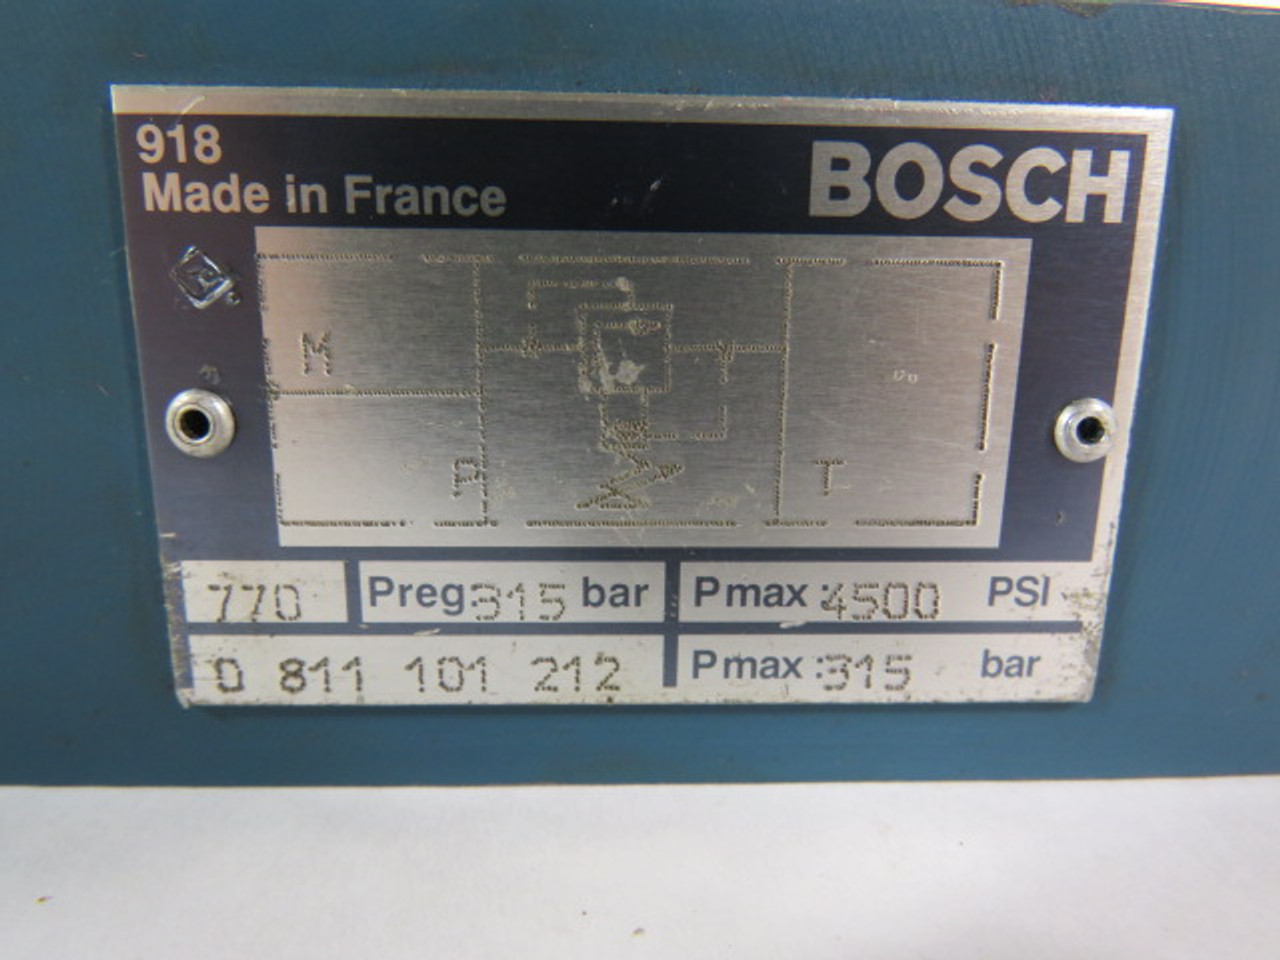 Bosch D-811-101-212 Modular Valve 4500PSI Max 315 Bar USED